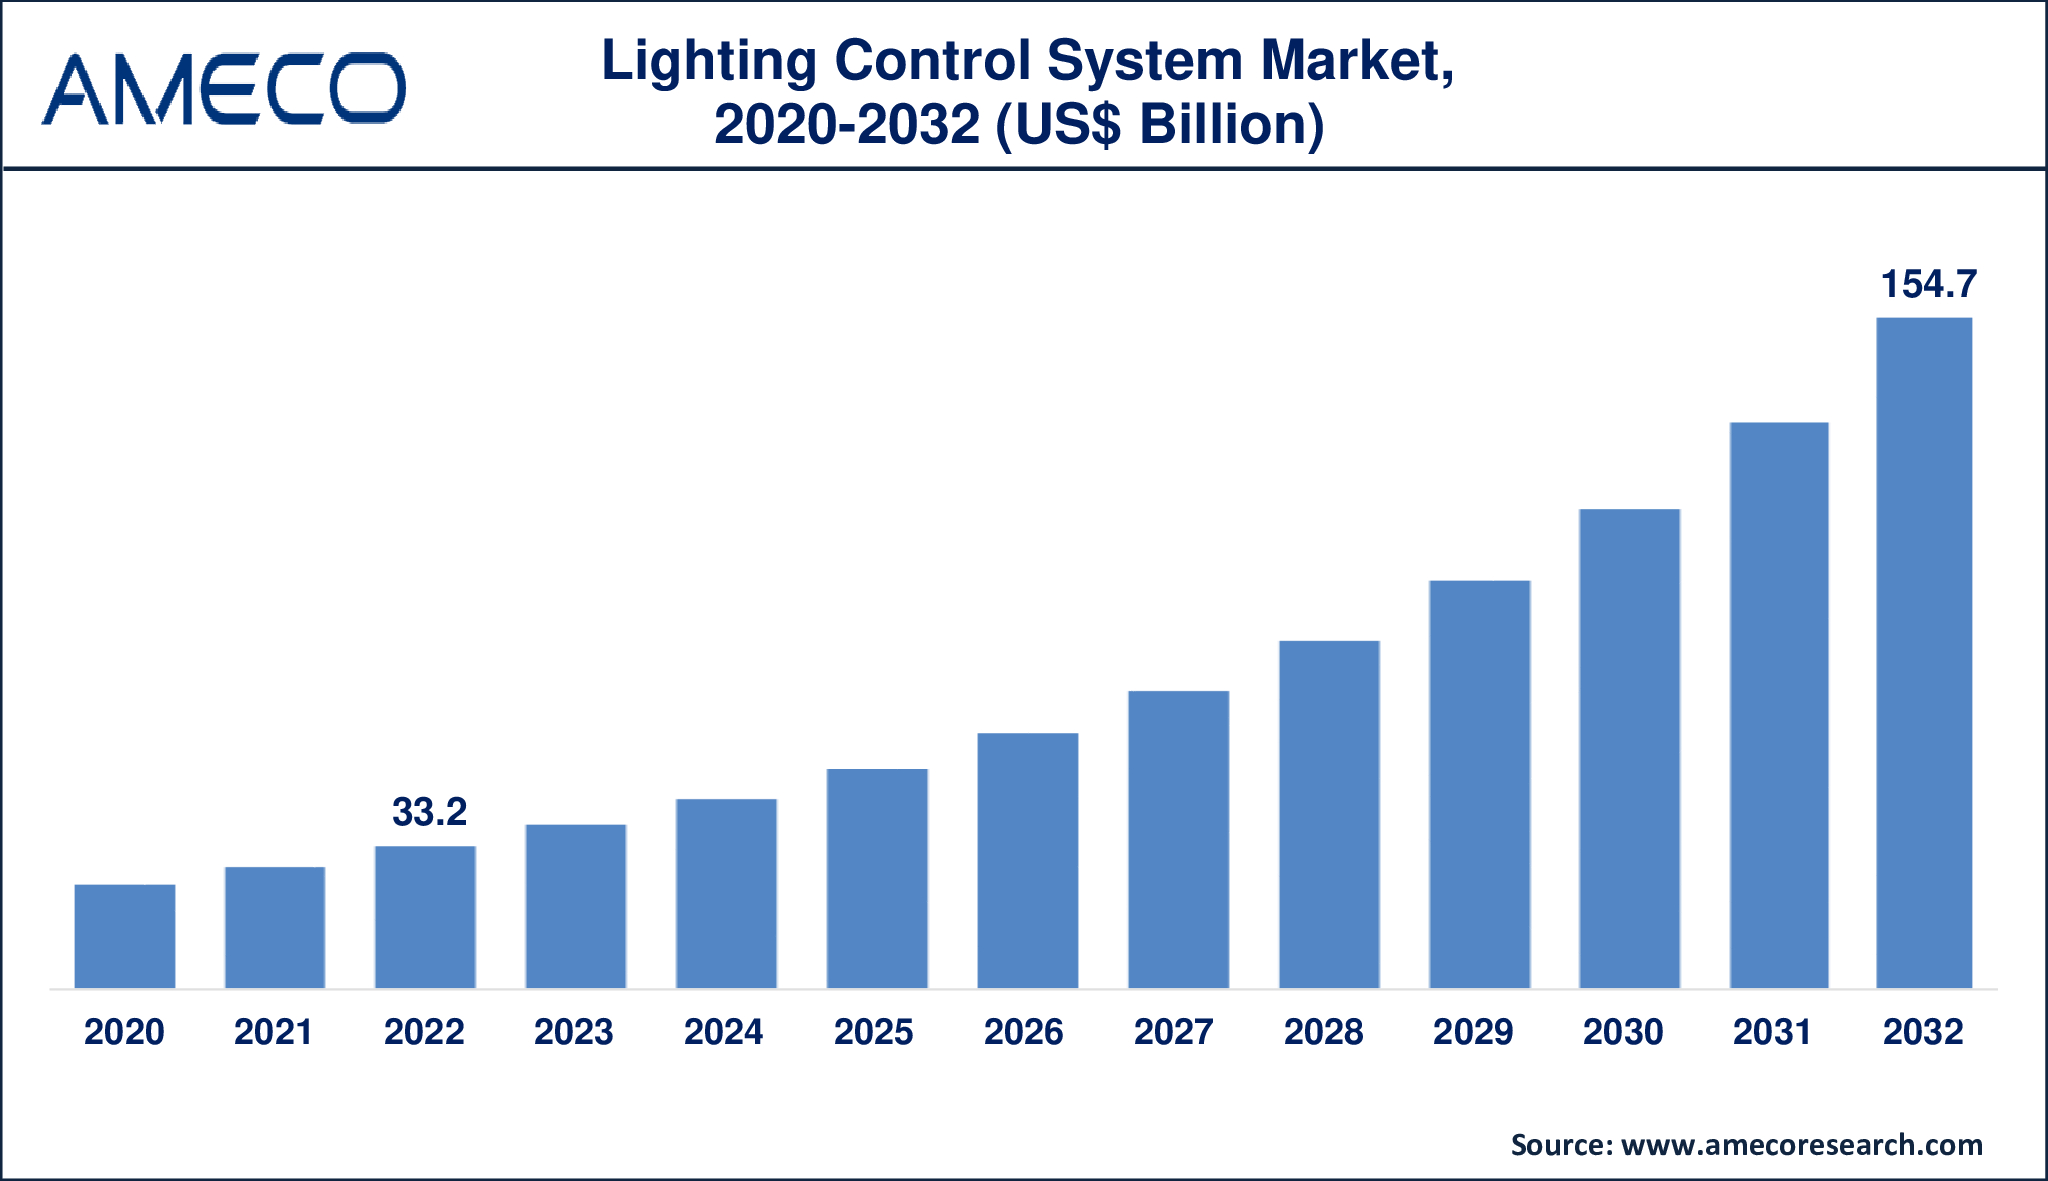 Lighting Control System Market Dynamics